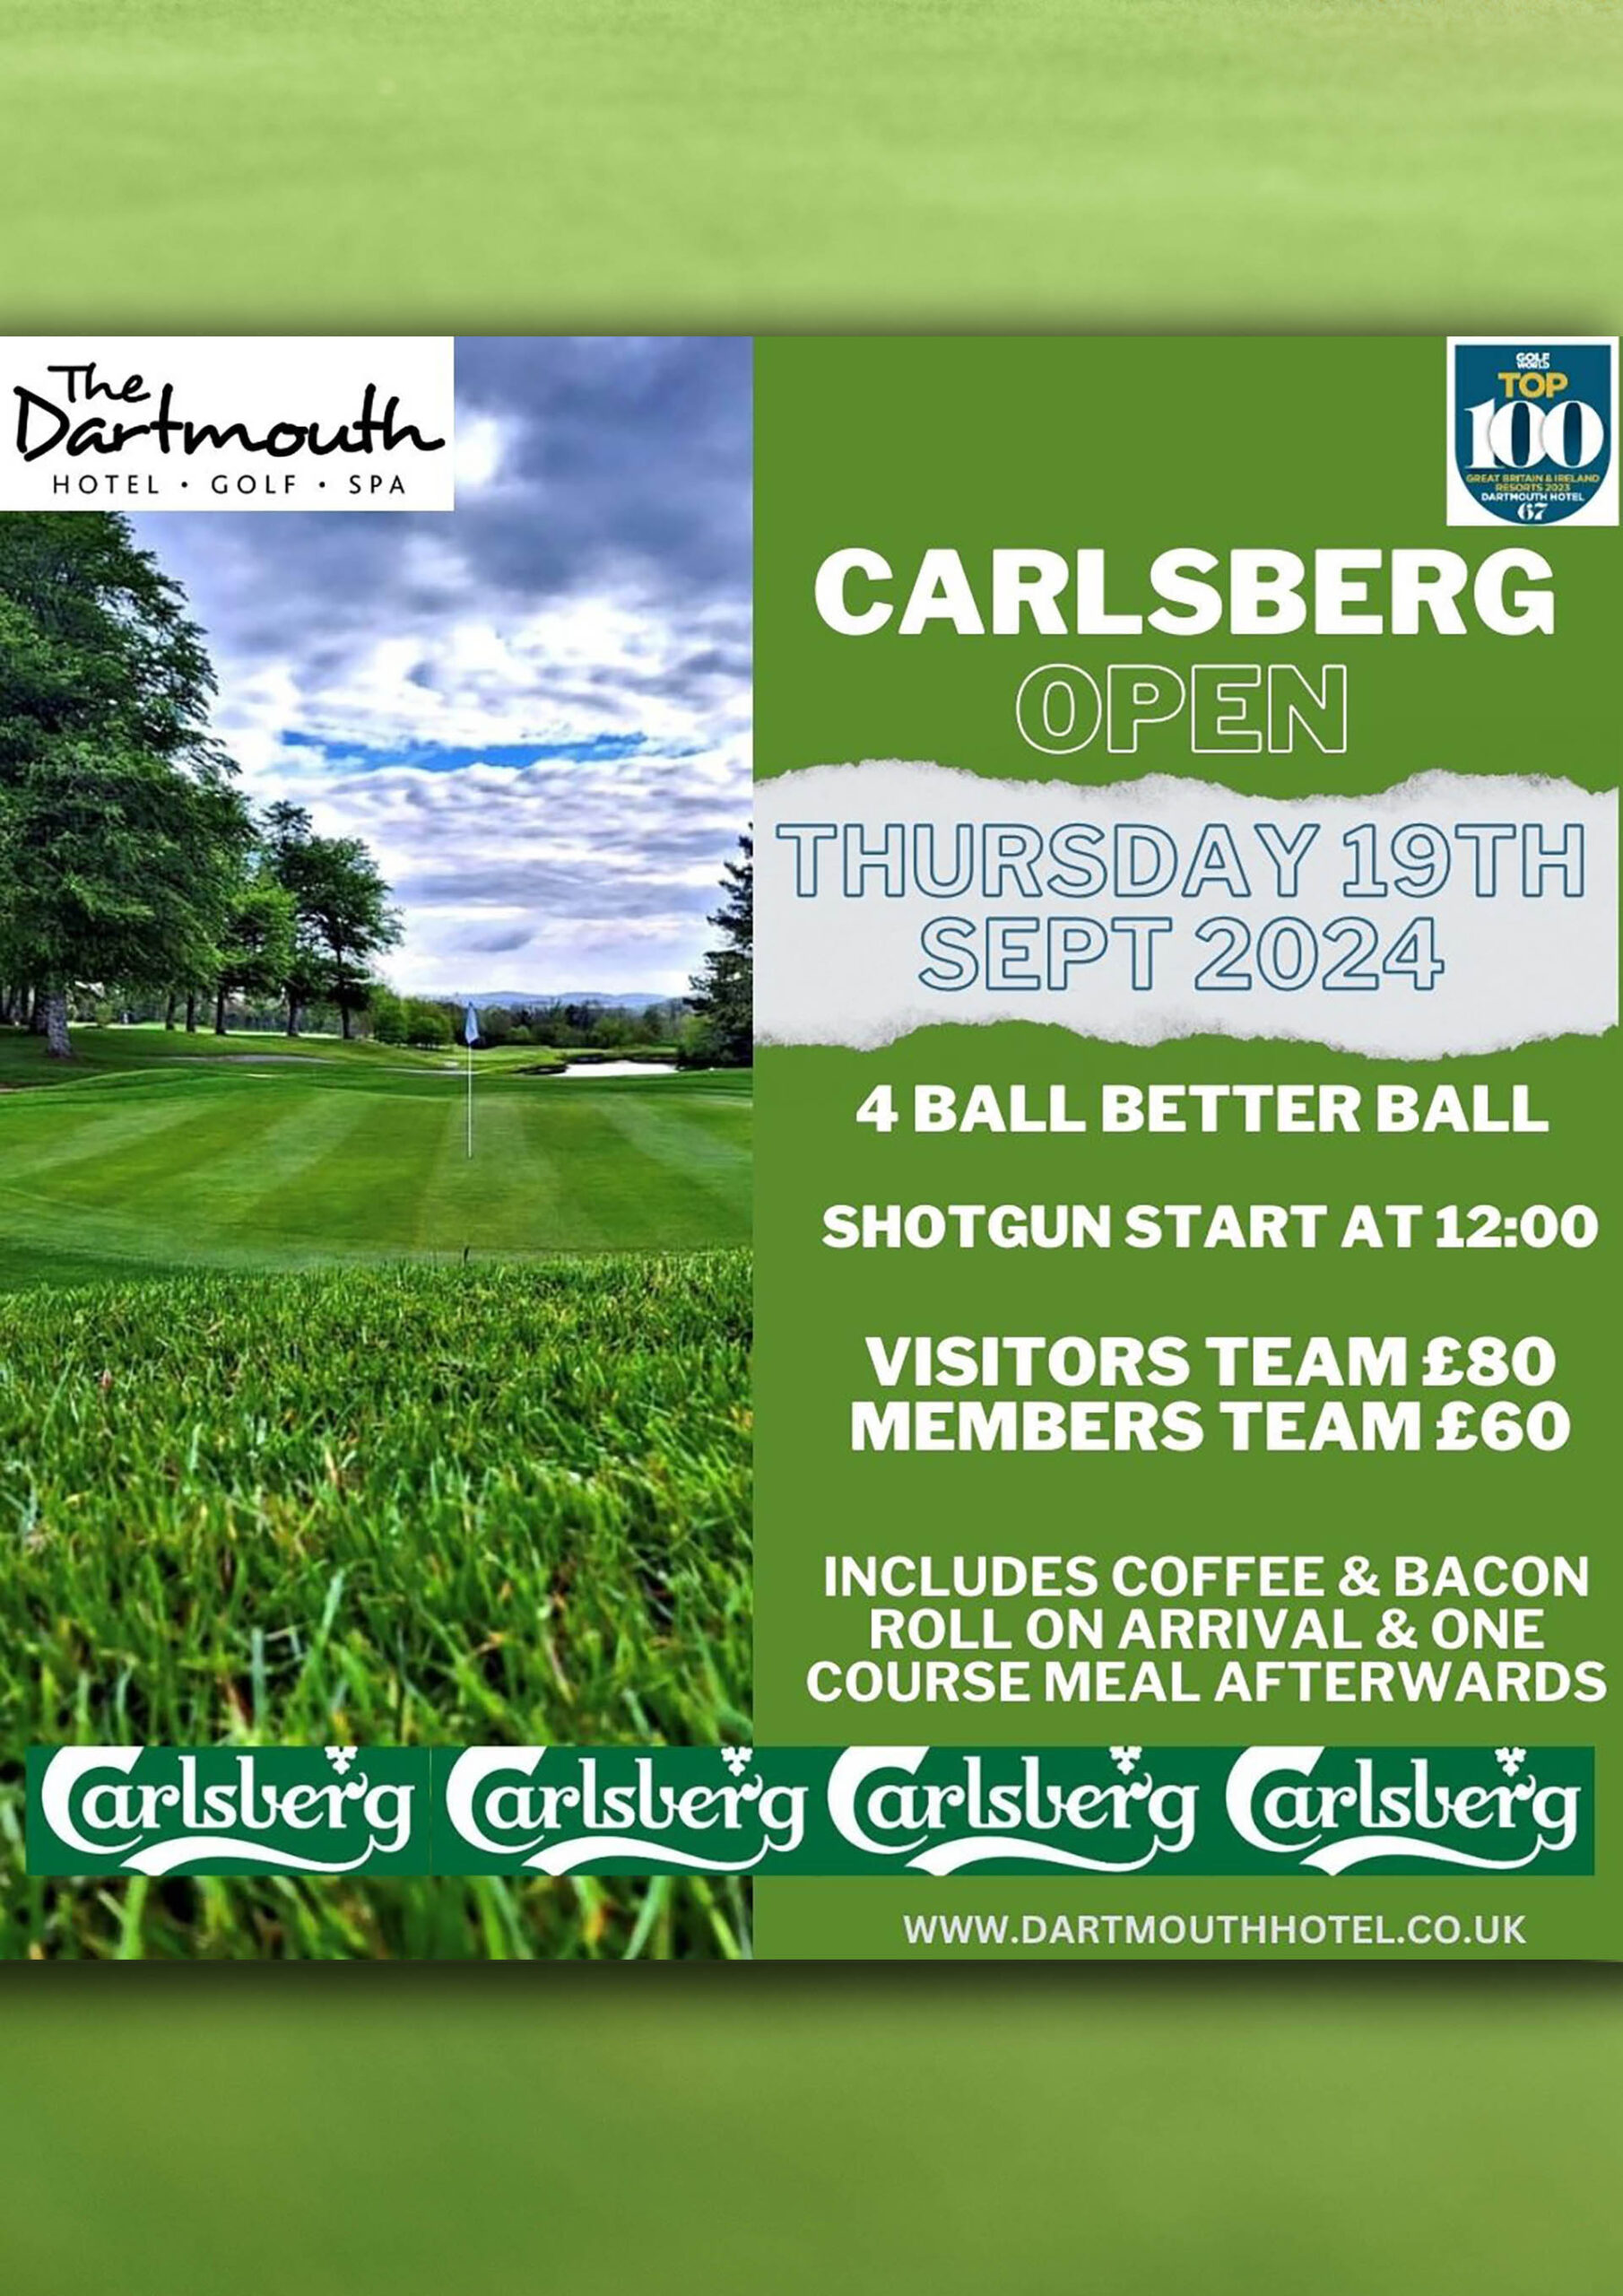 Carlesberg Open at the Dartmouth Hotel Golf & Spa